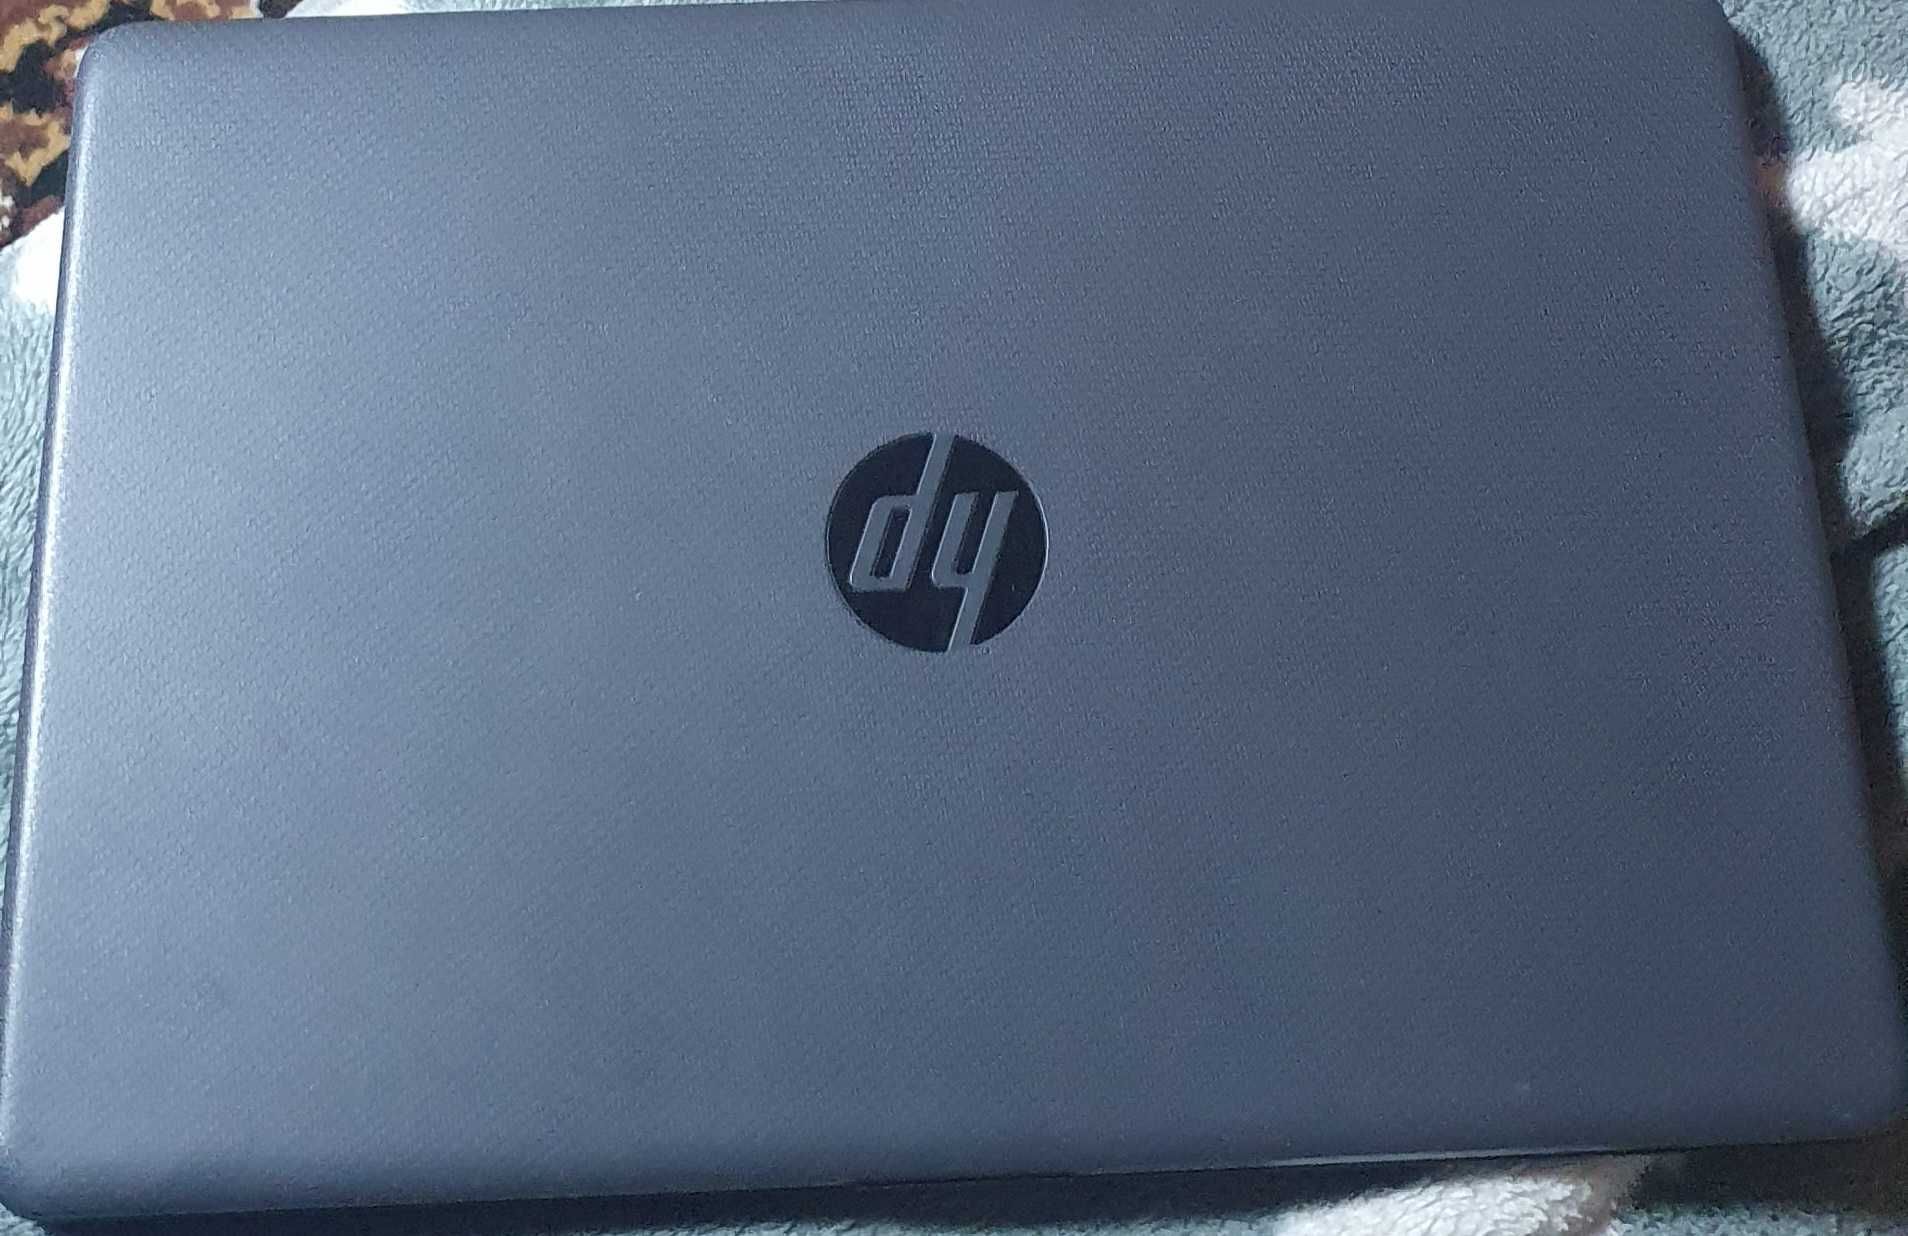 Laptop HP 250 G8